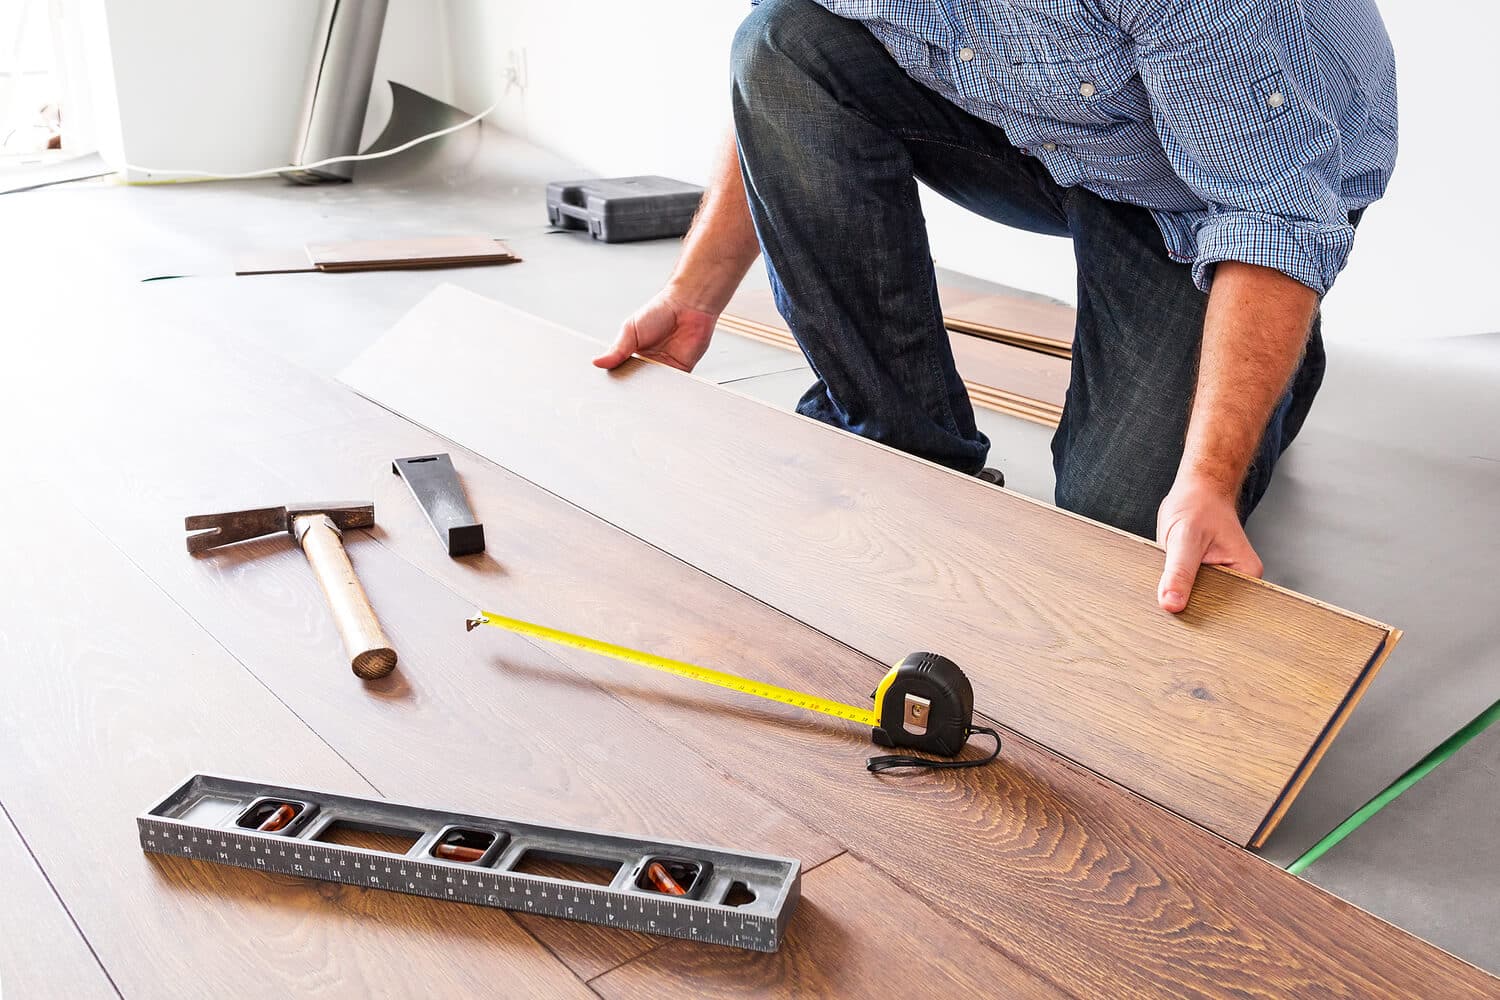 Find flooring contractors Ideal flooring contractors Our expert flooring specialists